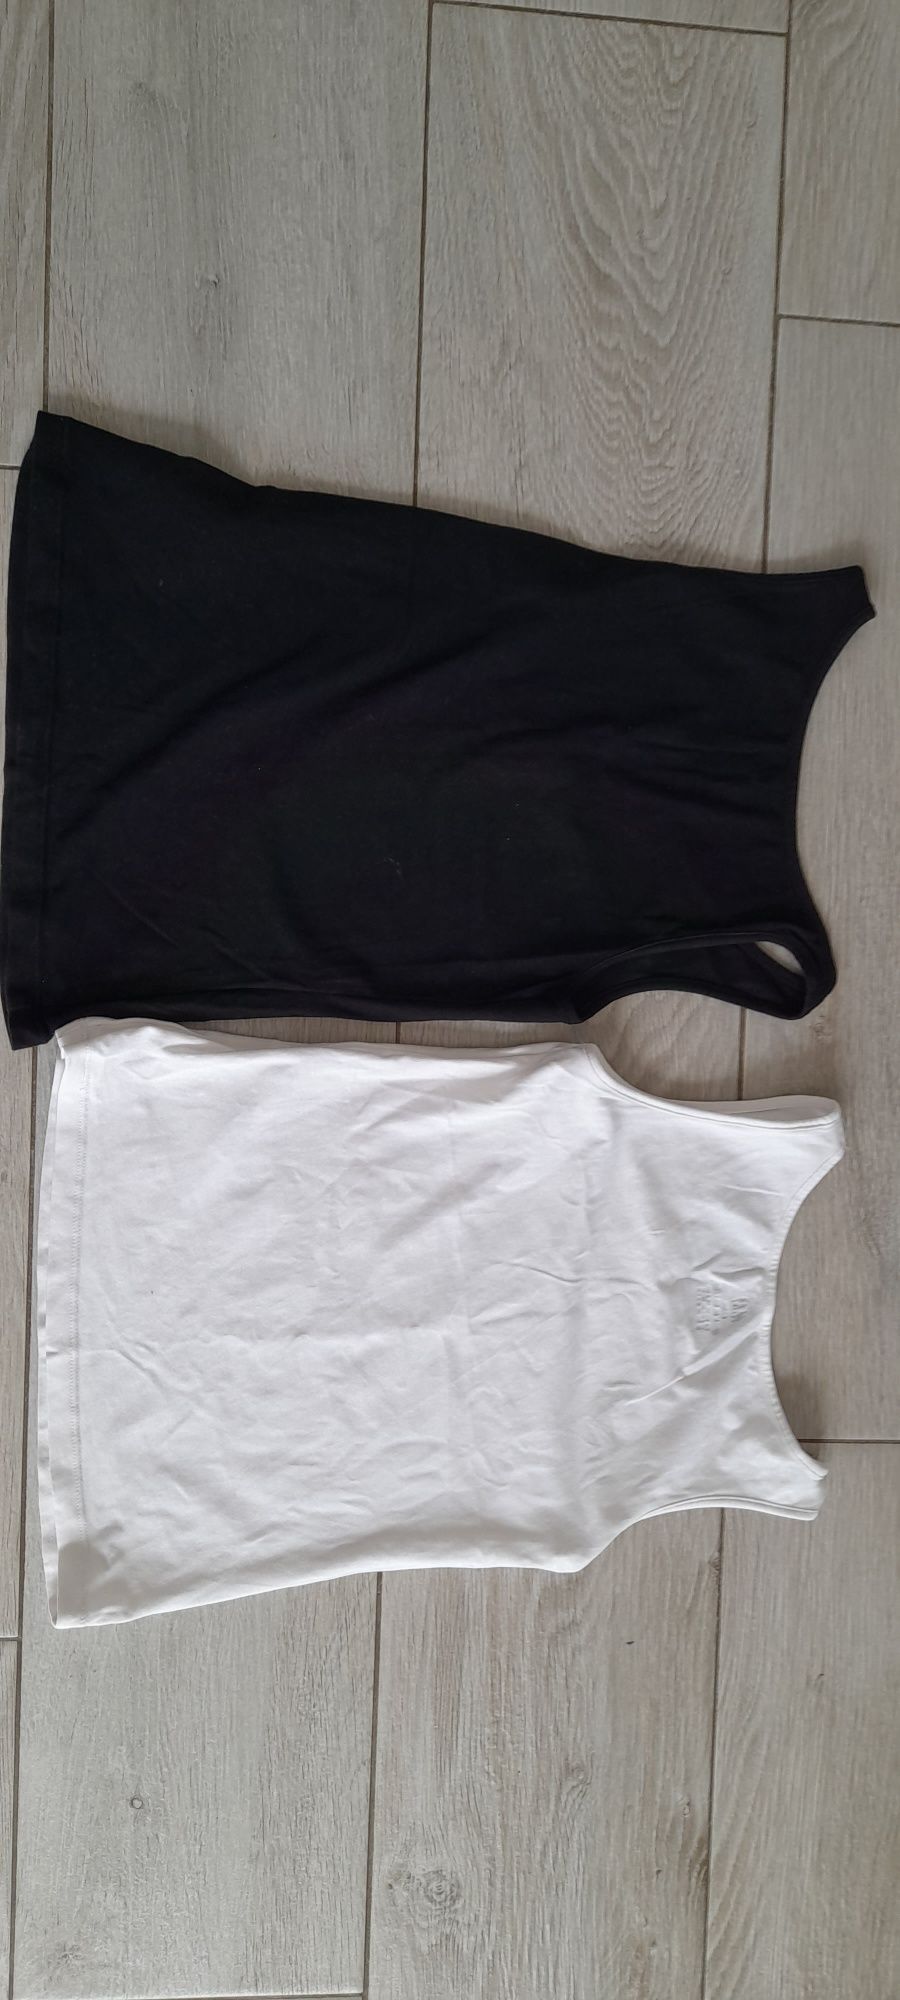 Koszulki H&M biala i czarna